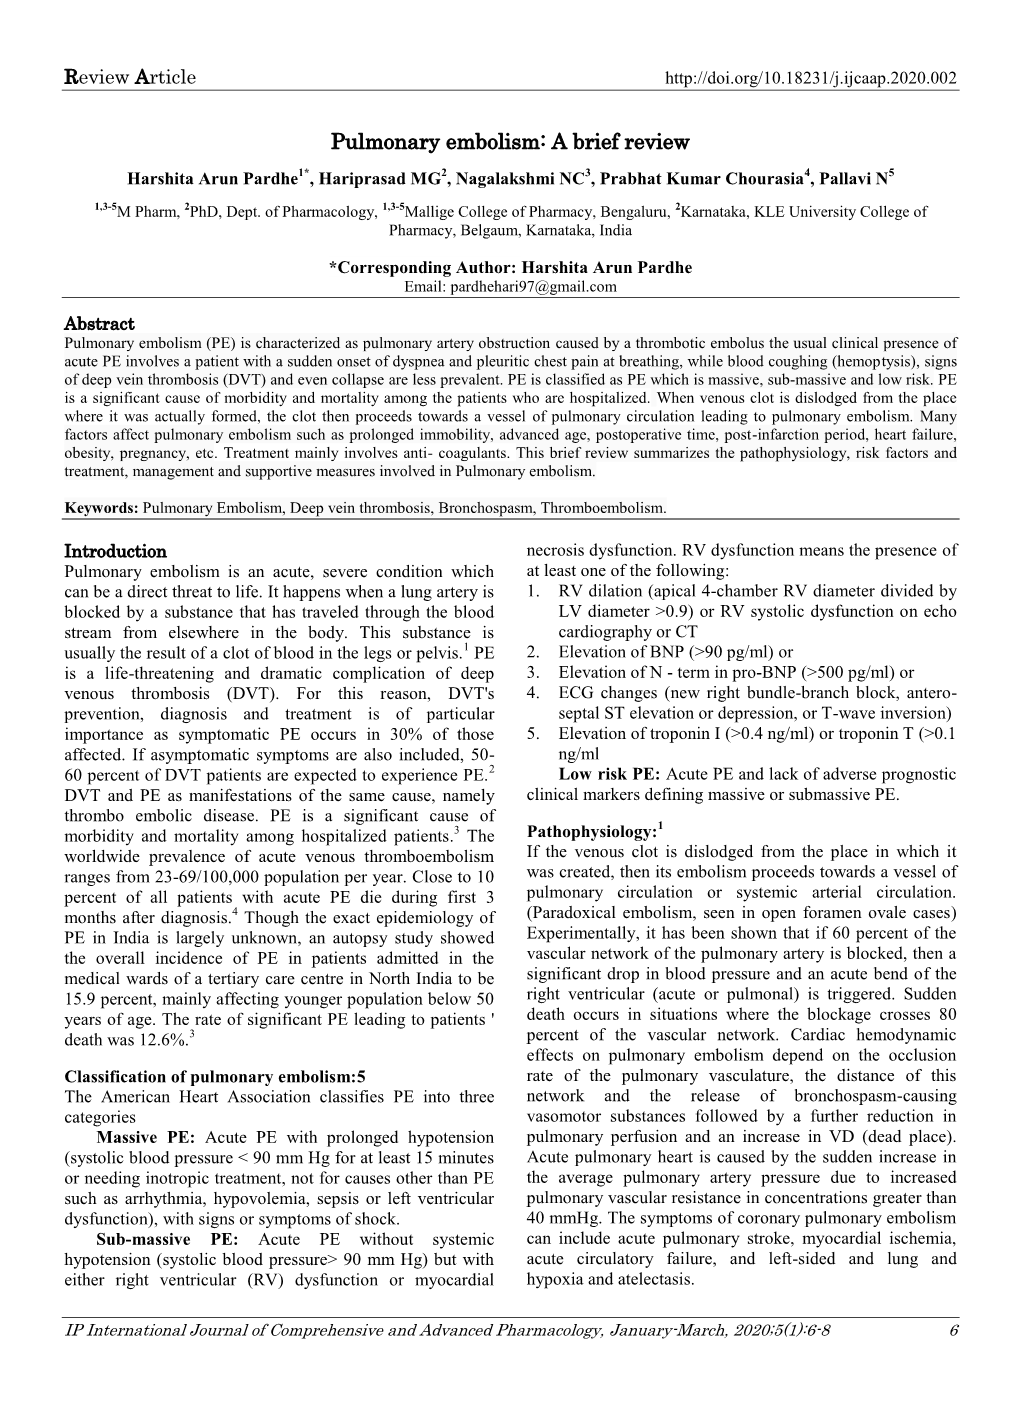 Pulmonary Embolism: a Brief Review Harshita Arun Pardhe1*, Hariprasad MG2, Nagalakshmi NC3, Prabhat Kumar Chourasia4, Pallavi N5